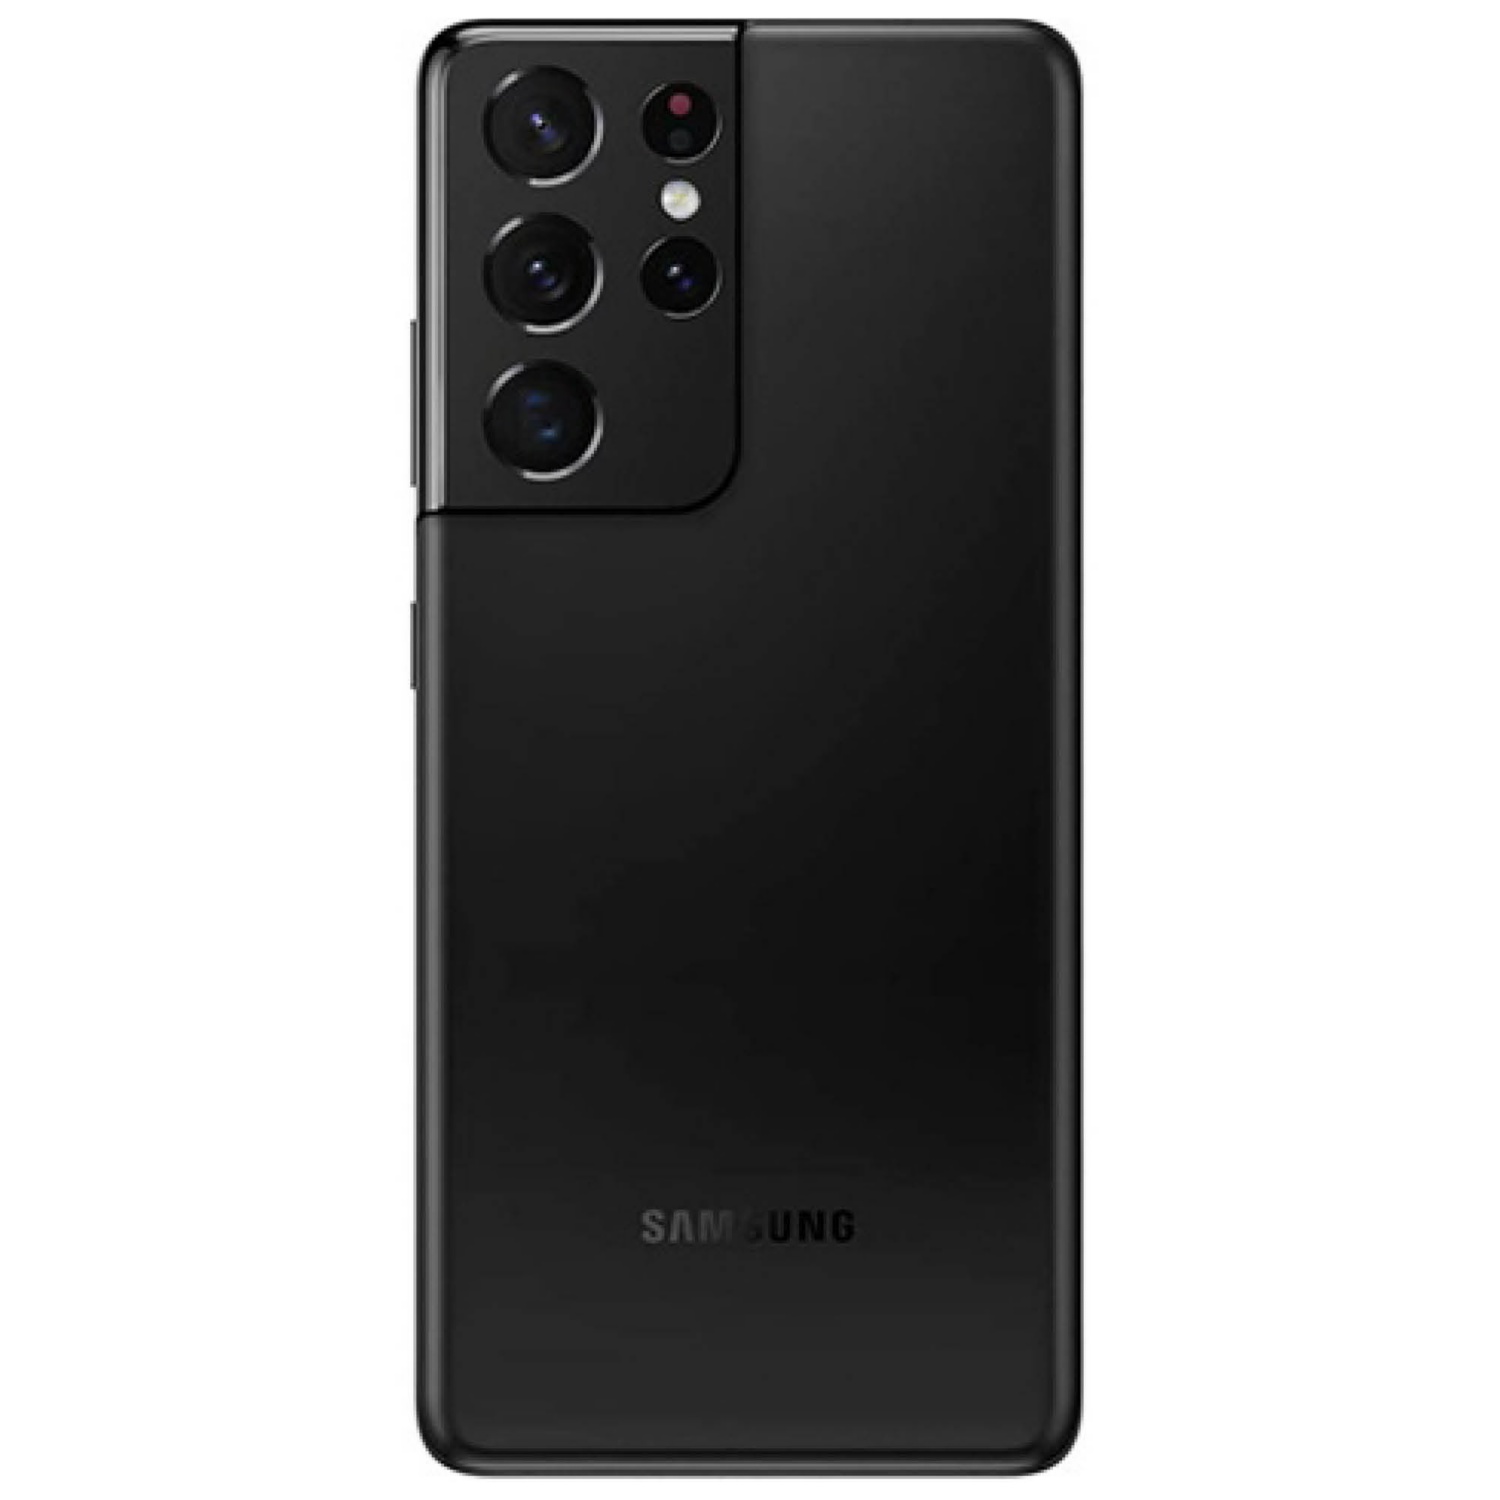 Samsung Galaxy S21 Ultra 5G (dual sim) Black